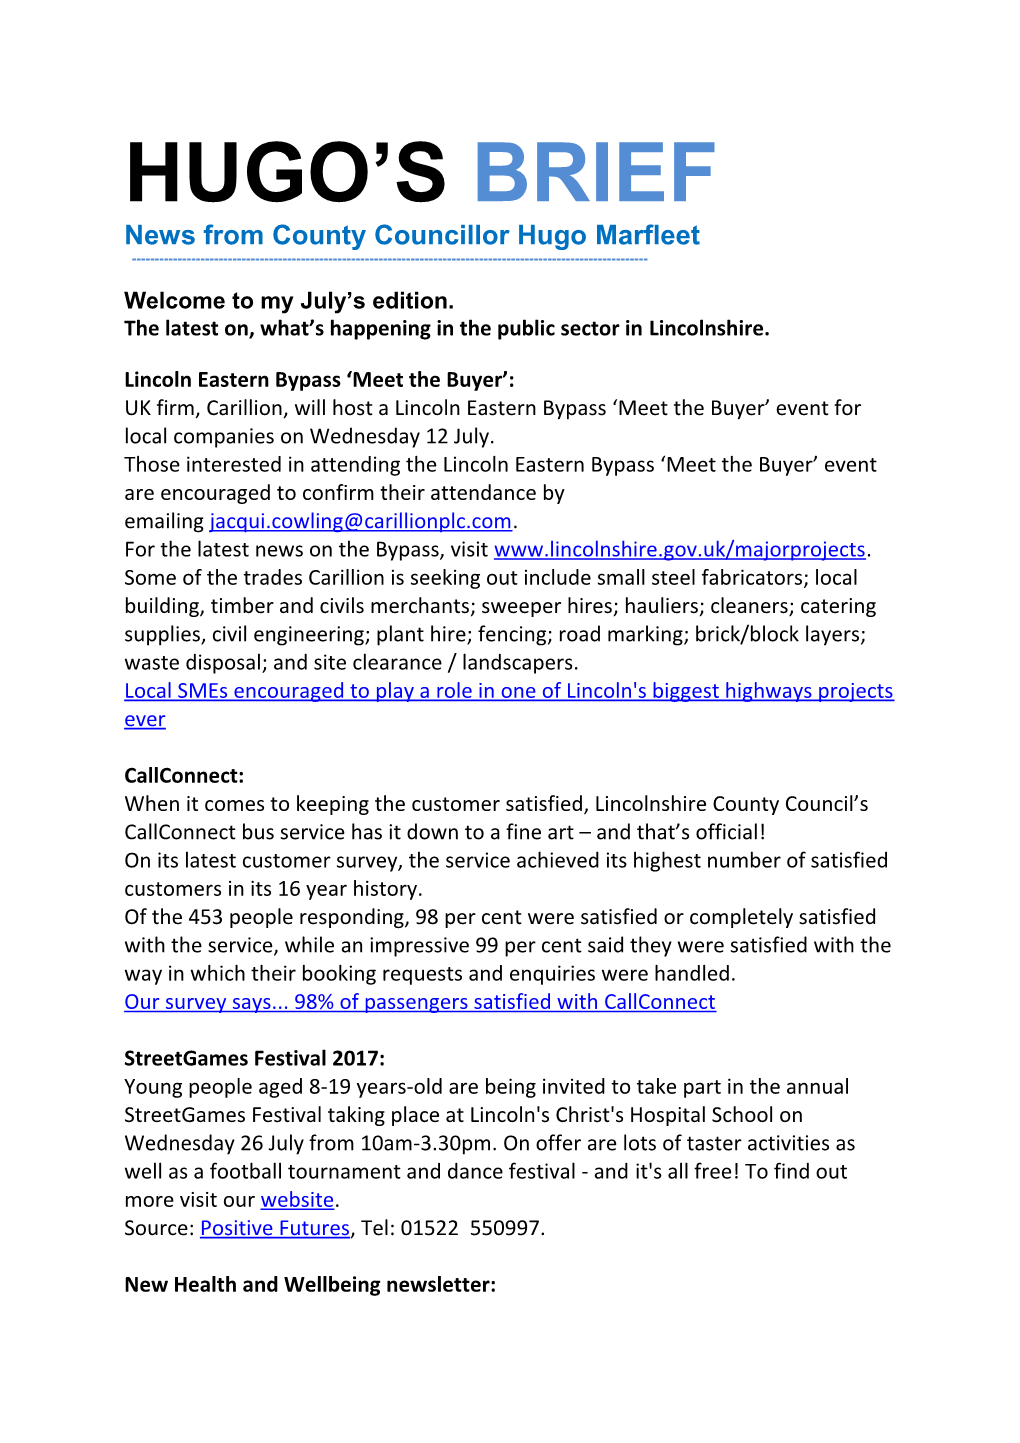 News from County Councillor Hugomarfleet